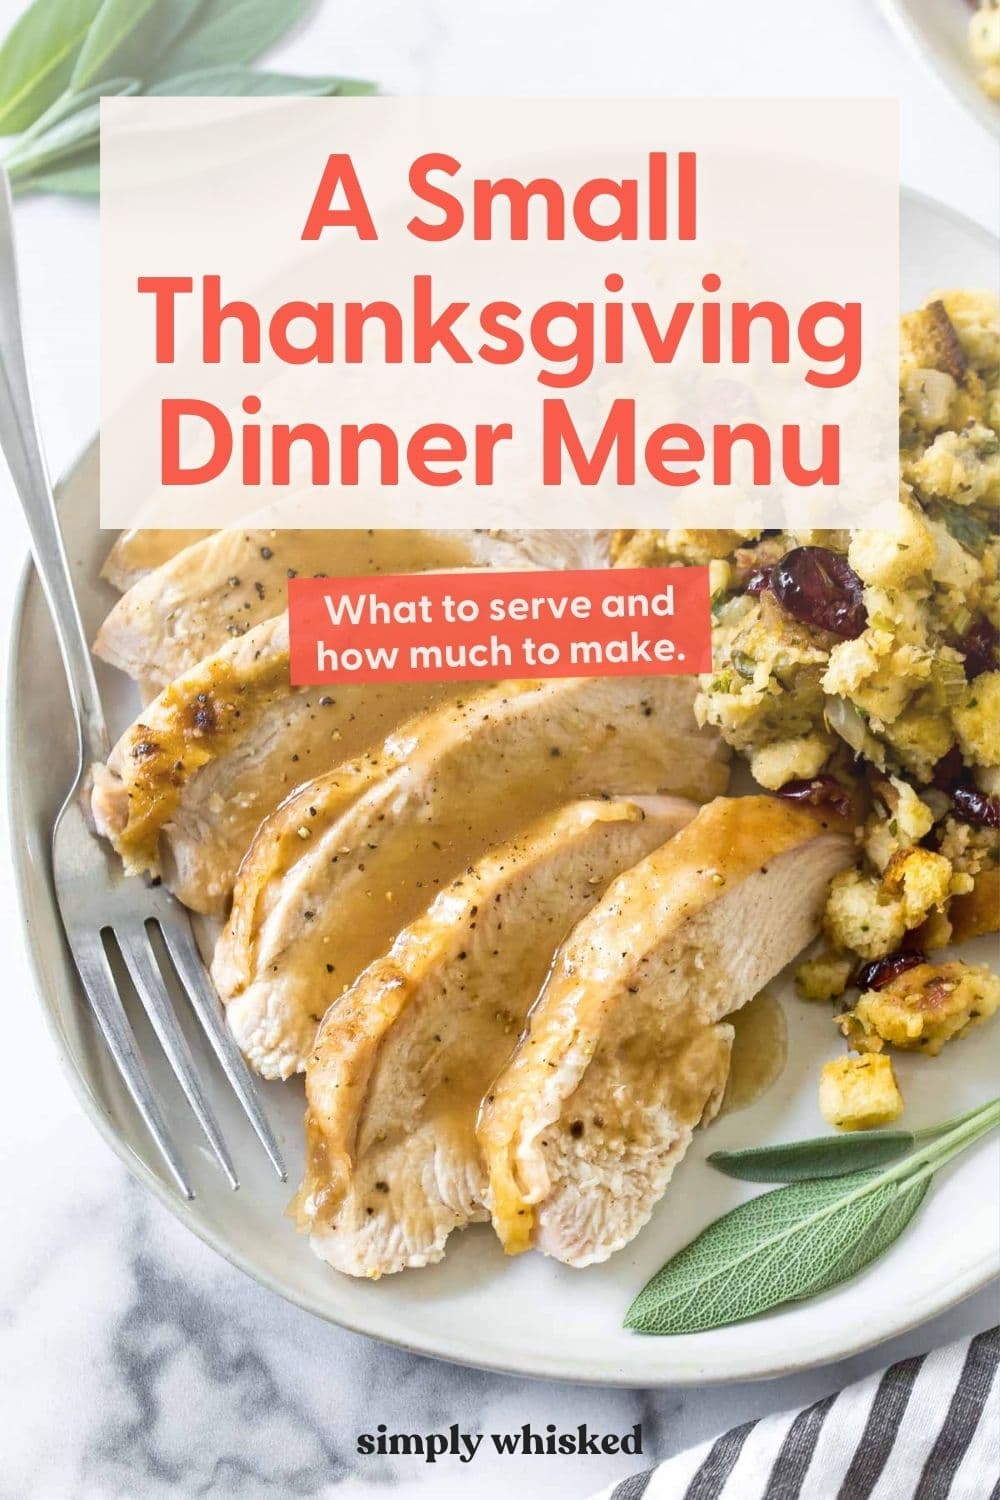 https://www.simplywhisked.com/wp-content/uploads/2014/11/thanksgiving-menu-pin-1.jpg